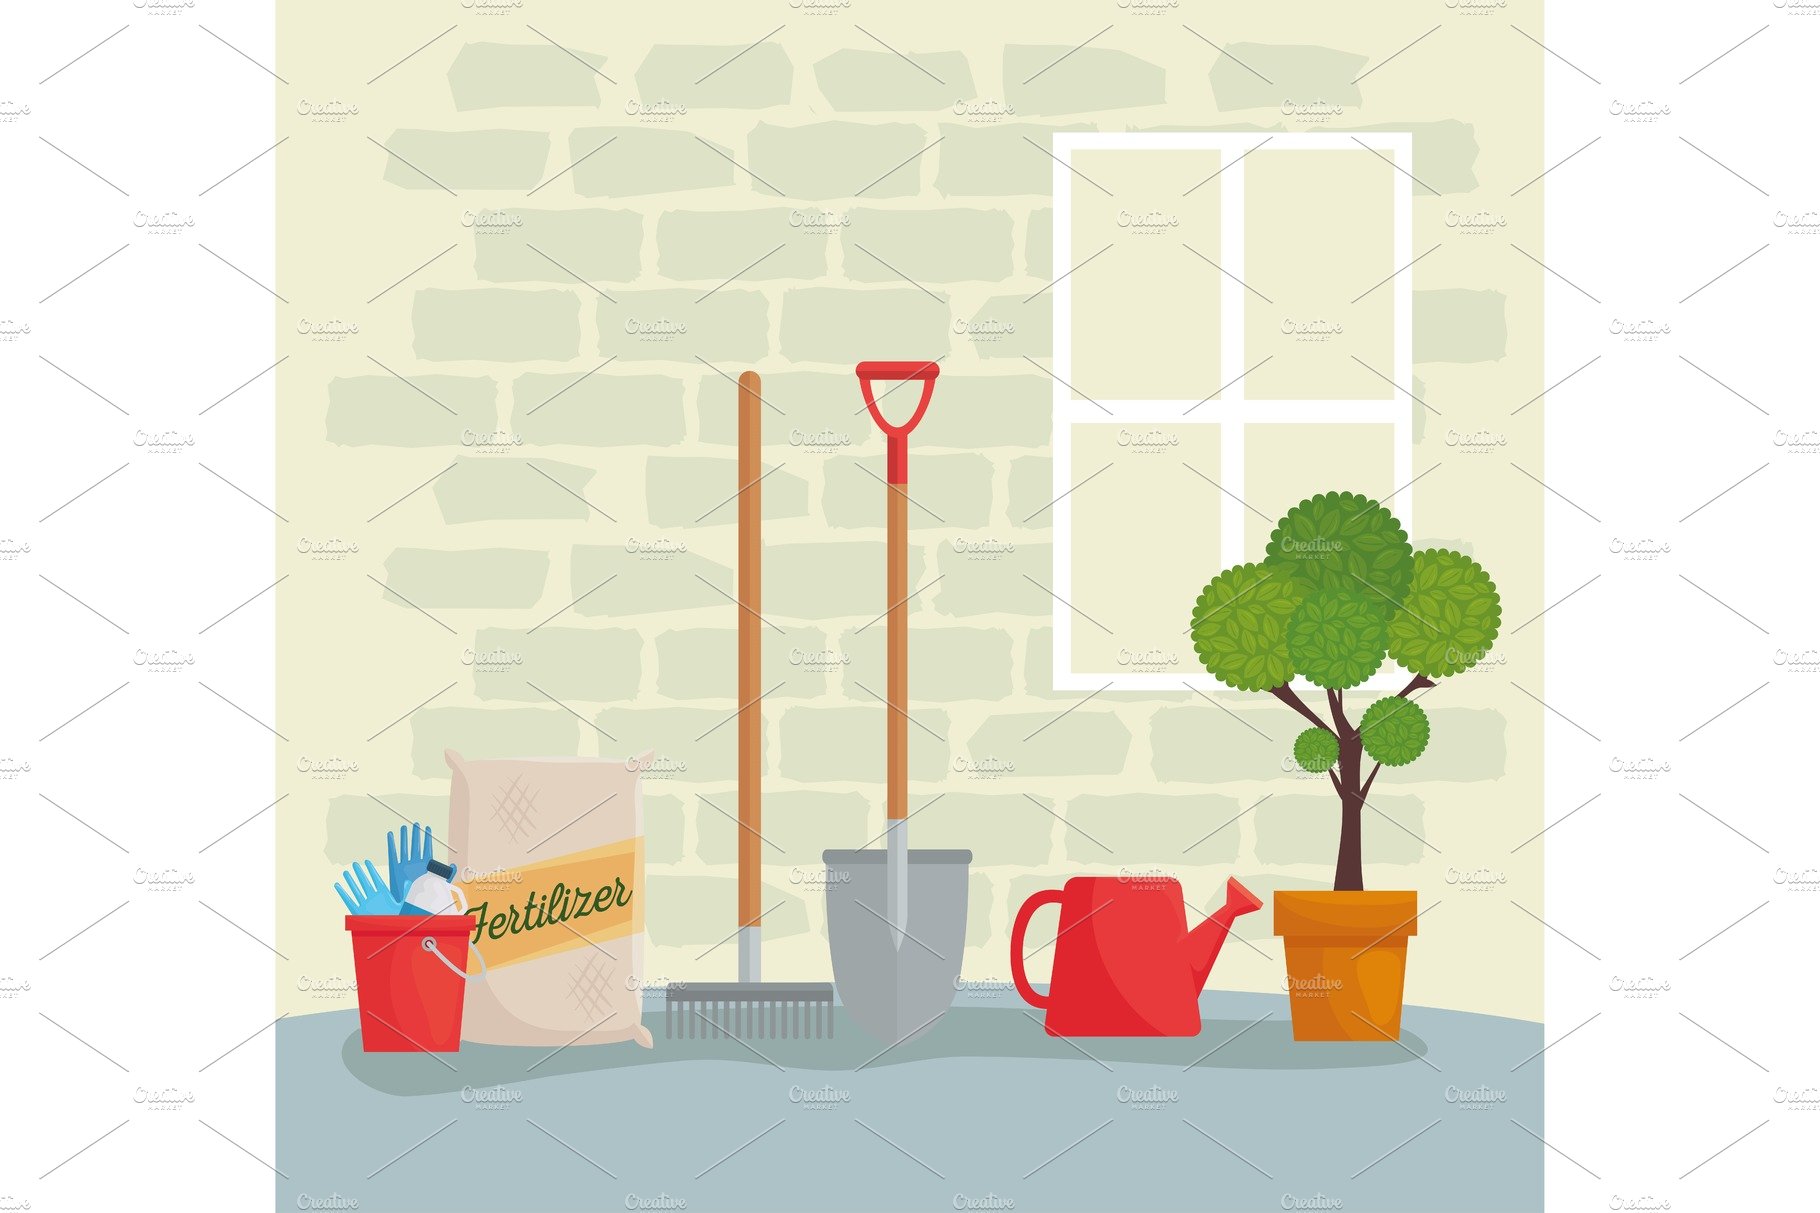 Gardening tools bucket fertilizer cover image.